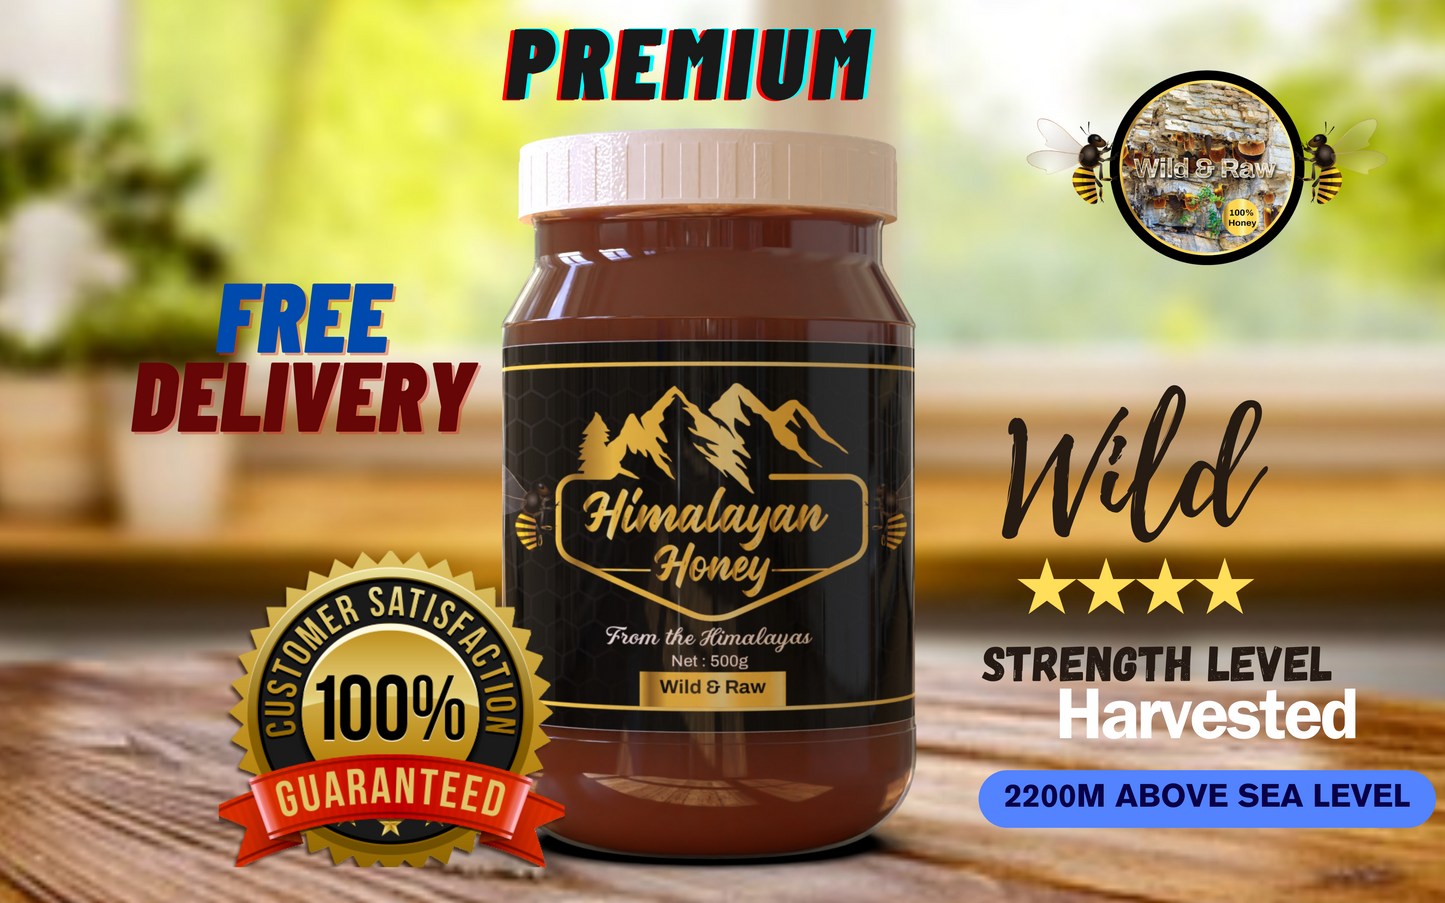 Mad Honey Himalayan premium 500g Gold range Nepal